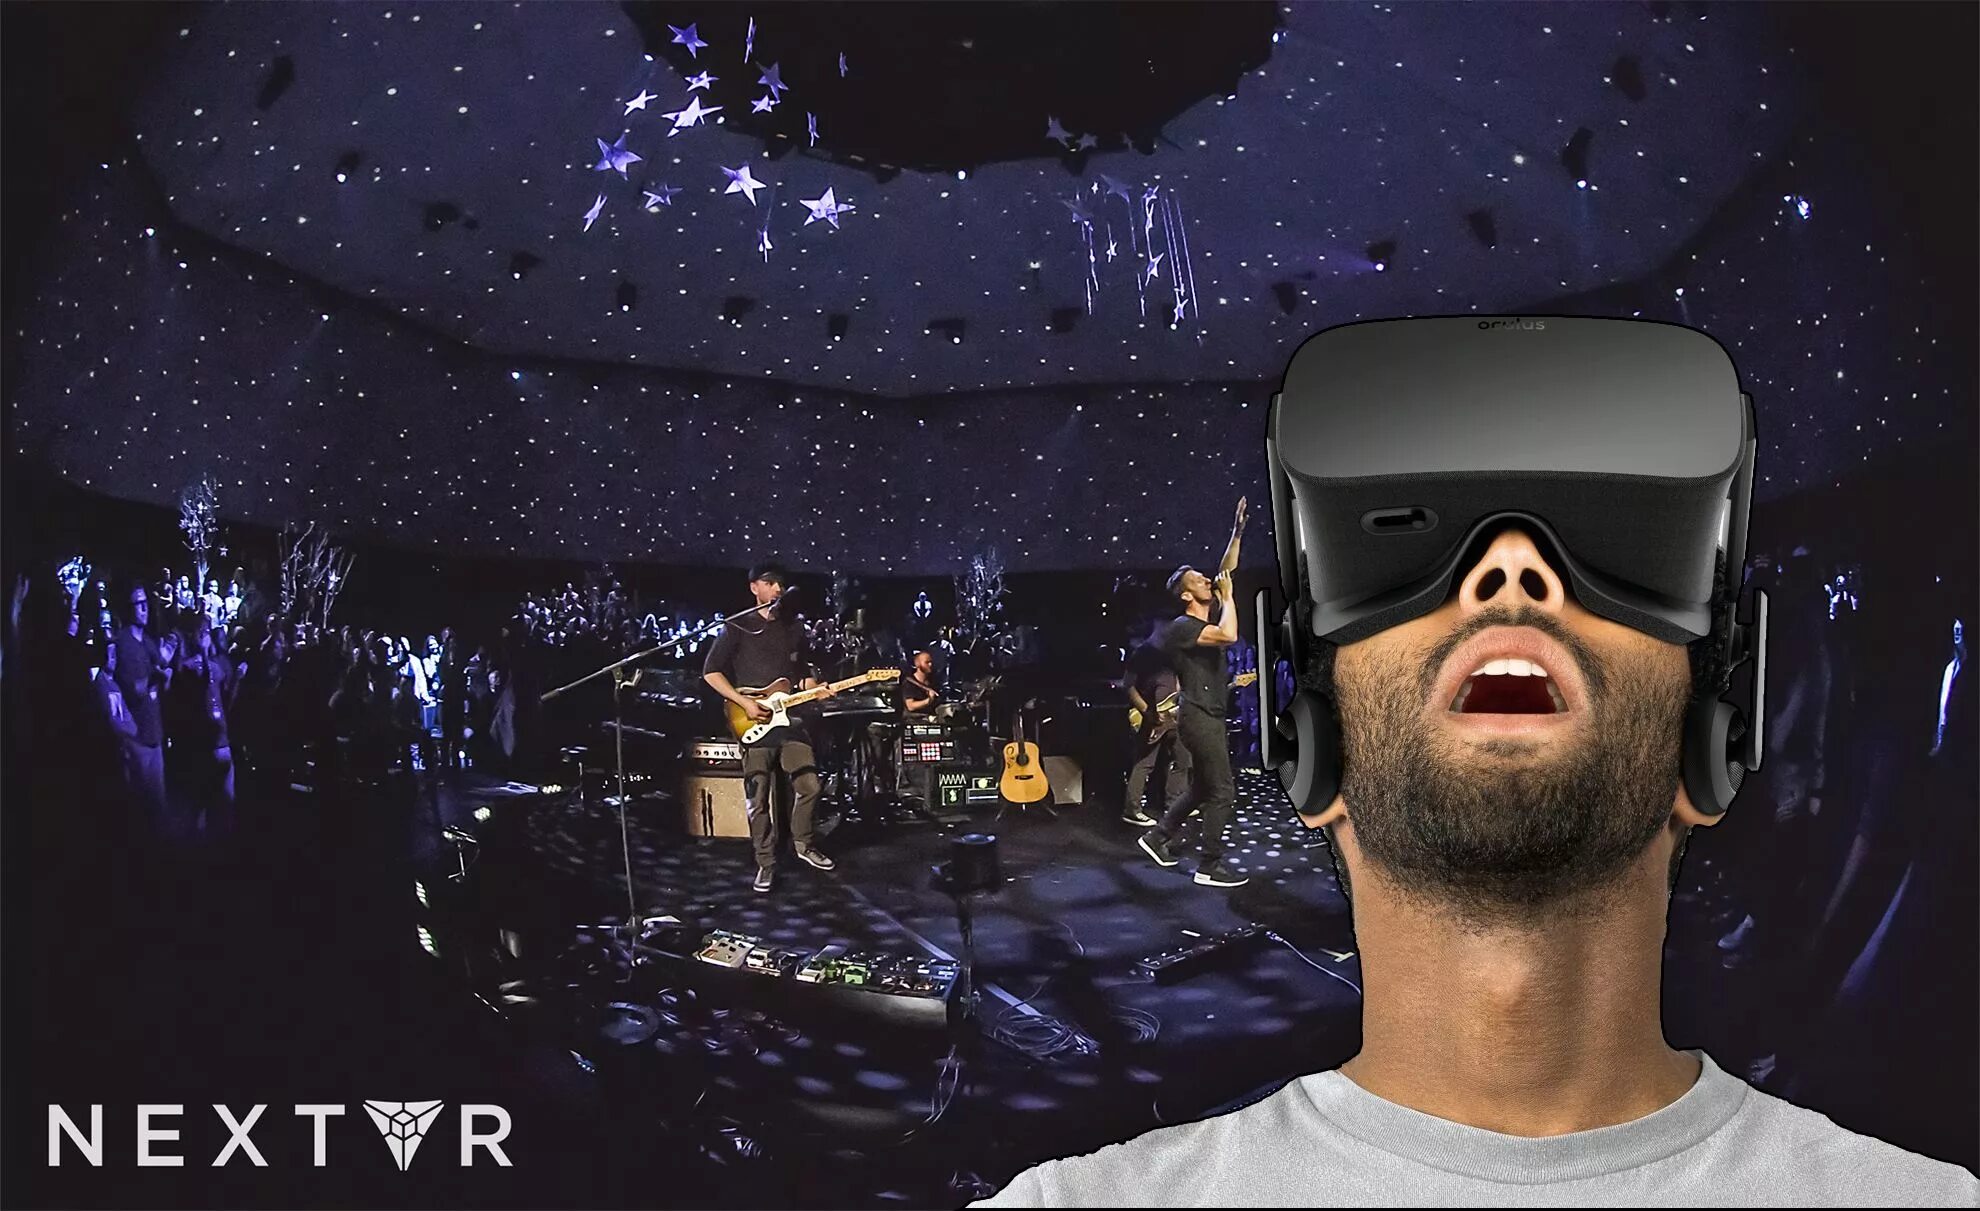 Виар VR. VR виртуальная реальность. Концерт в виртуальной реальности. Сцена виртуальной реальности.